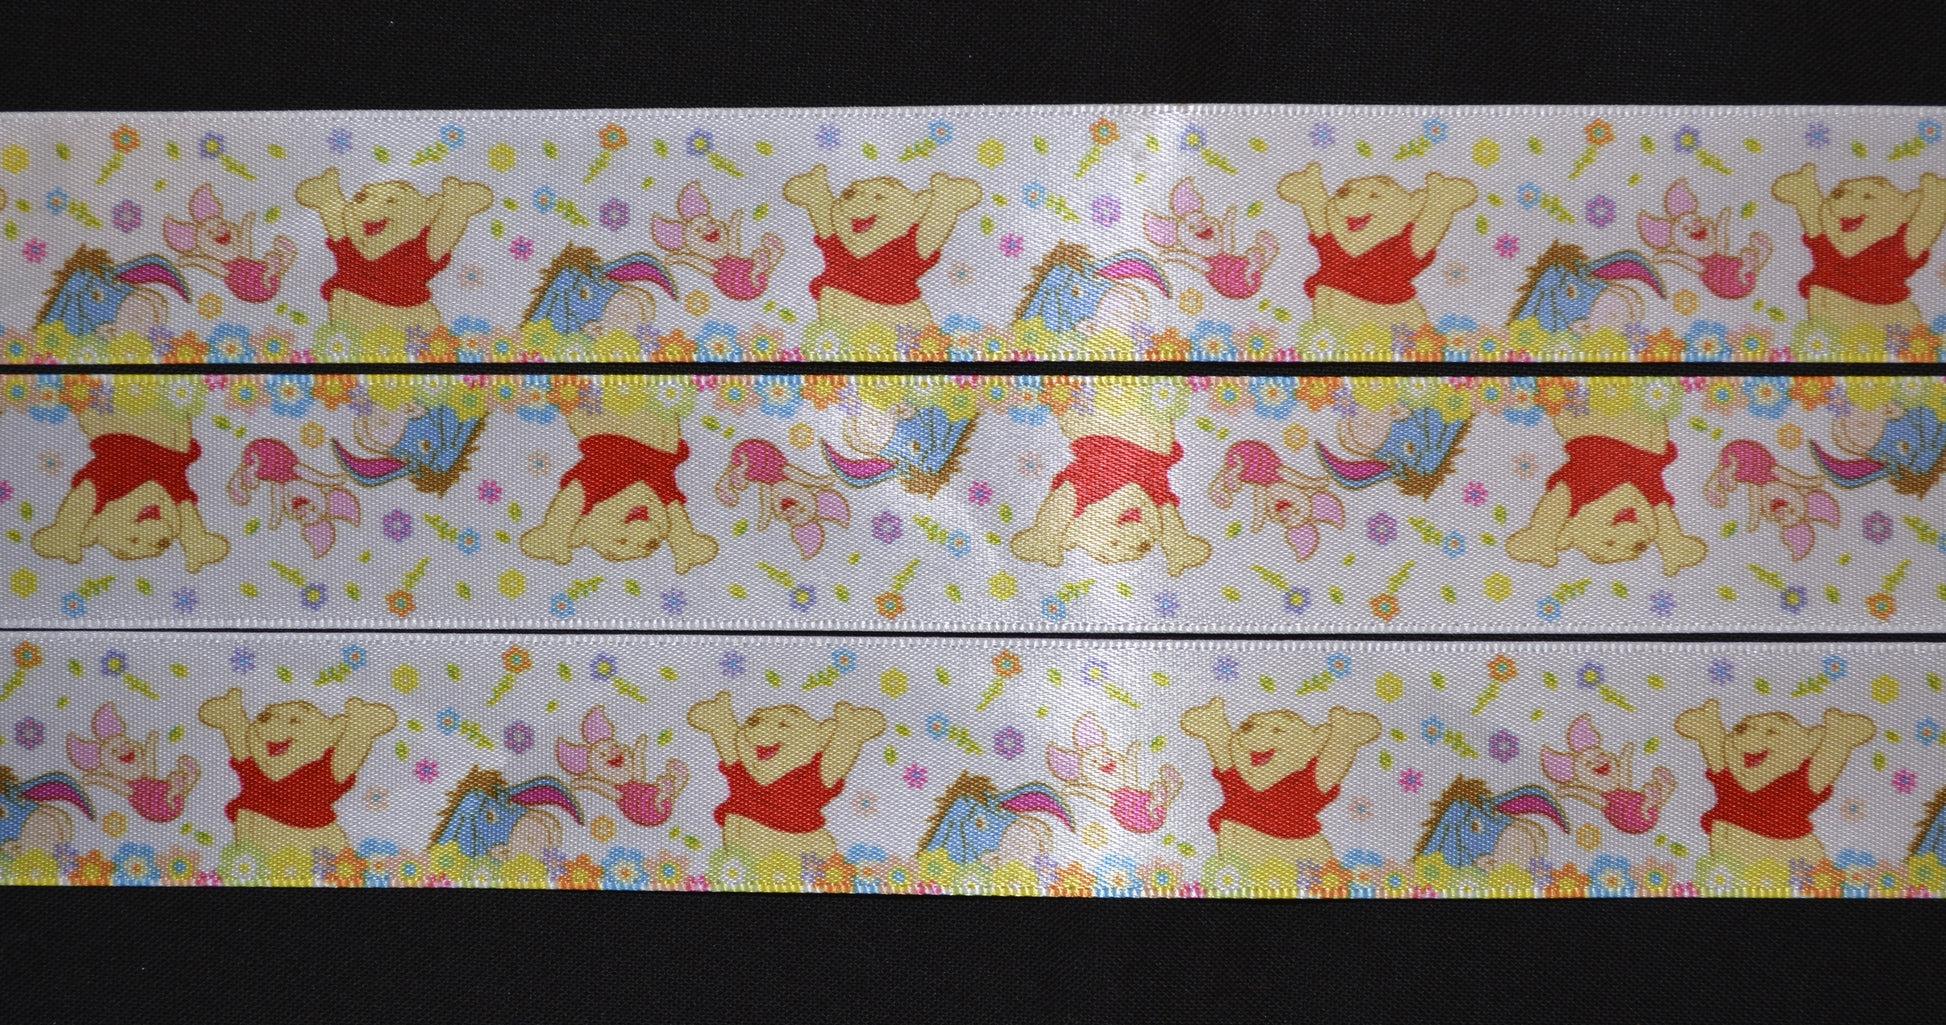 Classic Winnie Pooh Ribbon, Cartoon Disney Printed Ribbon